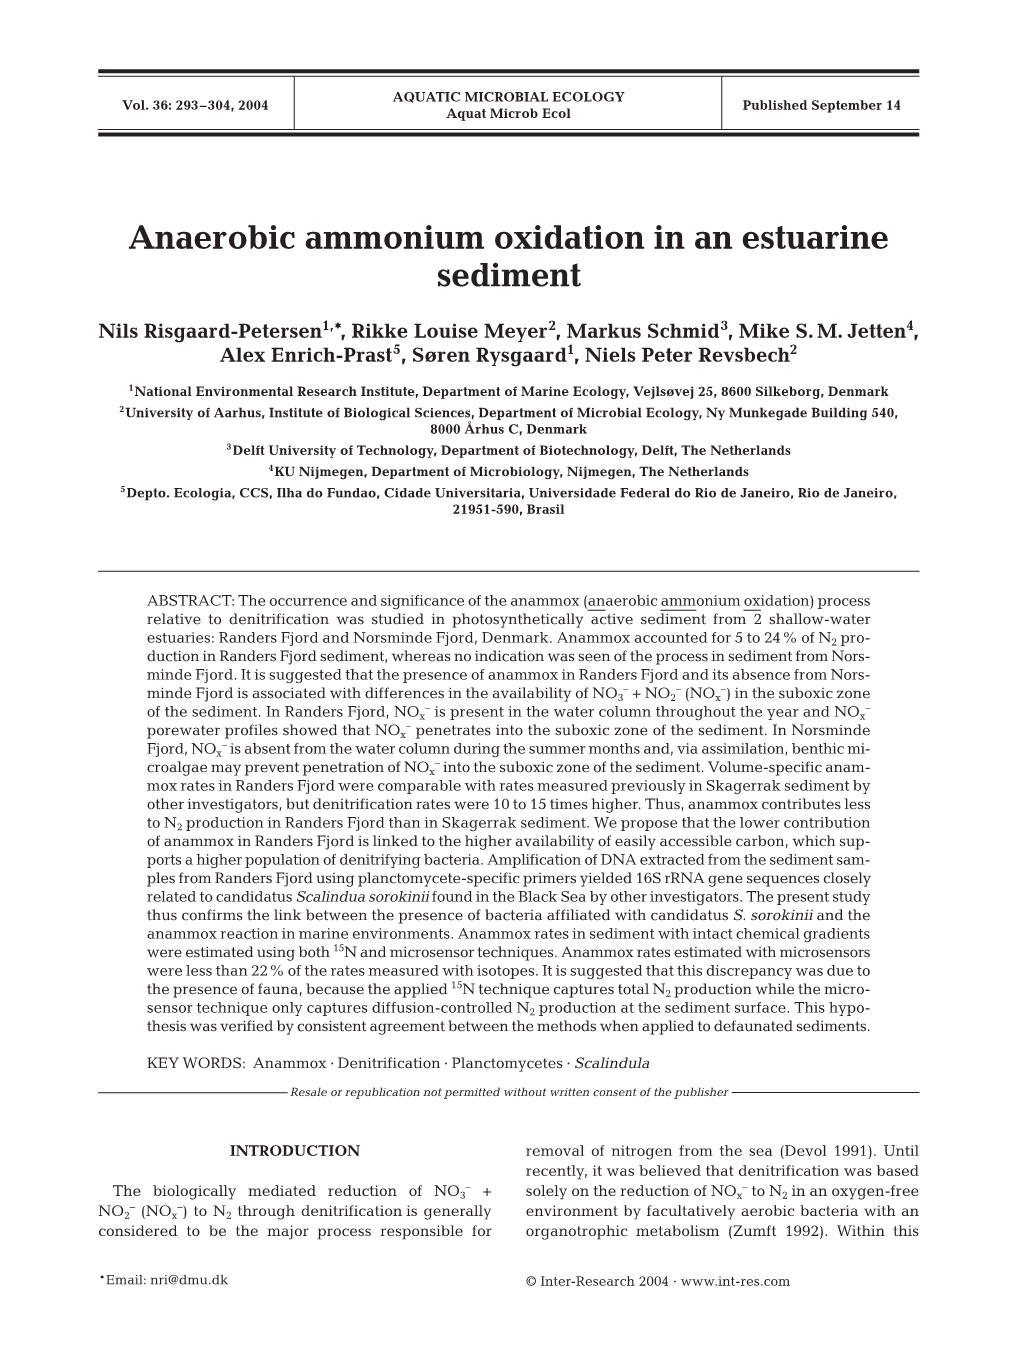 Anaerobic Ammonium Oxidation in an Estuarine Sediment